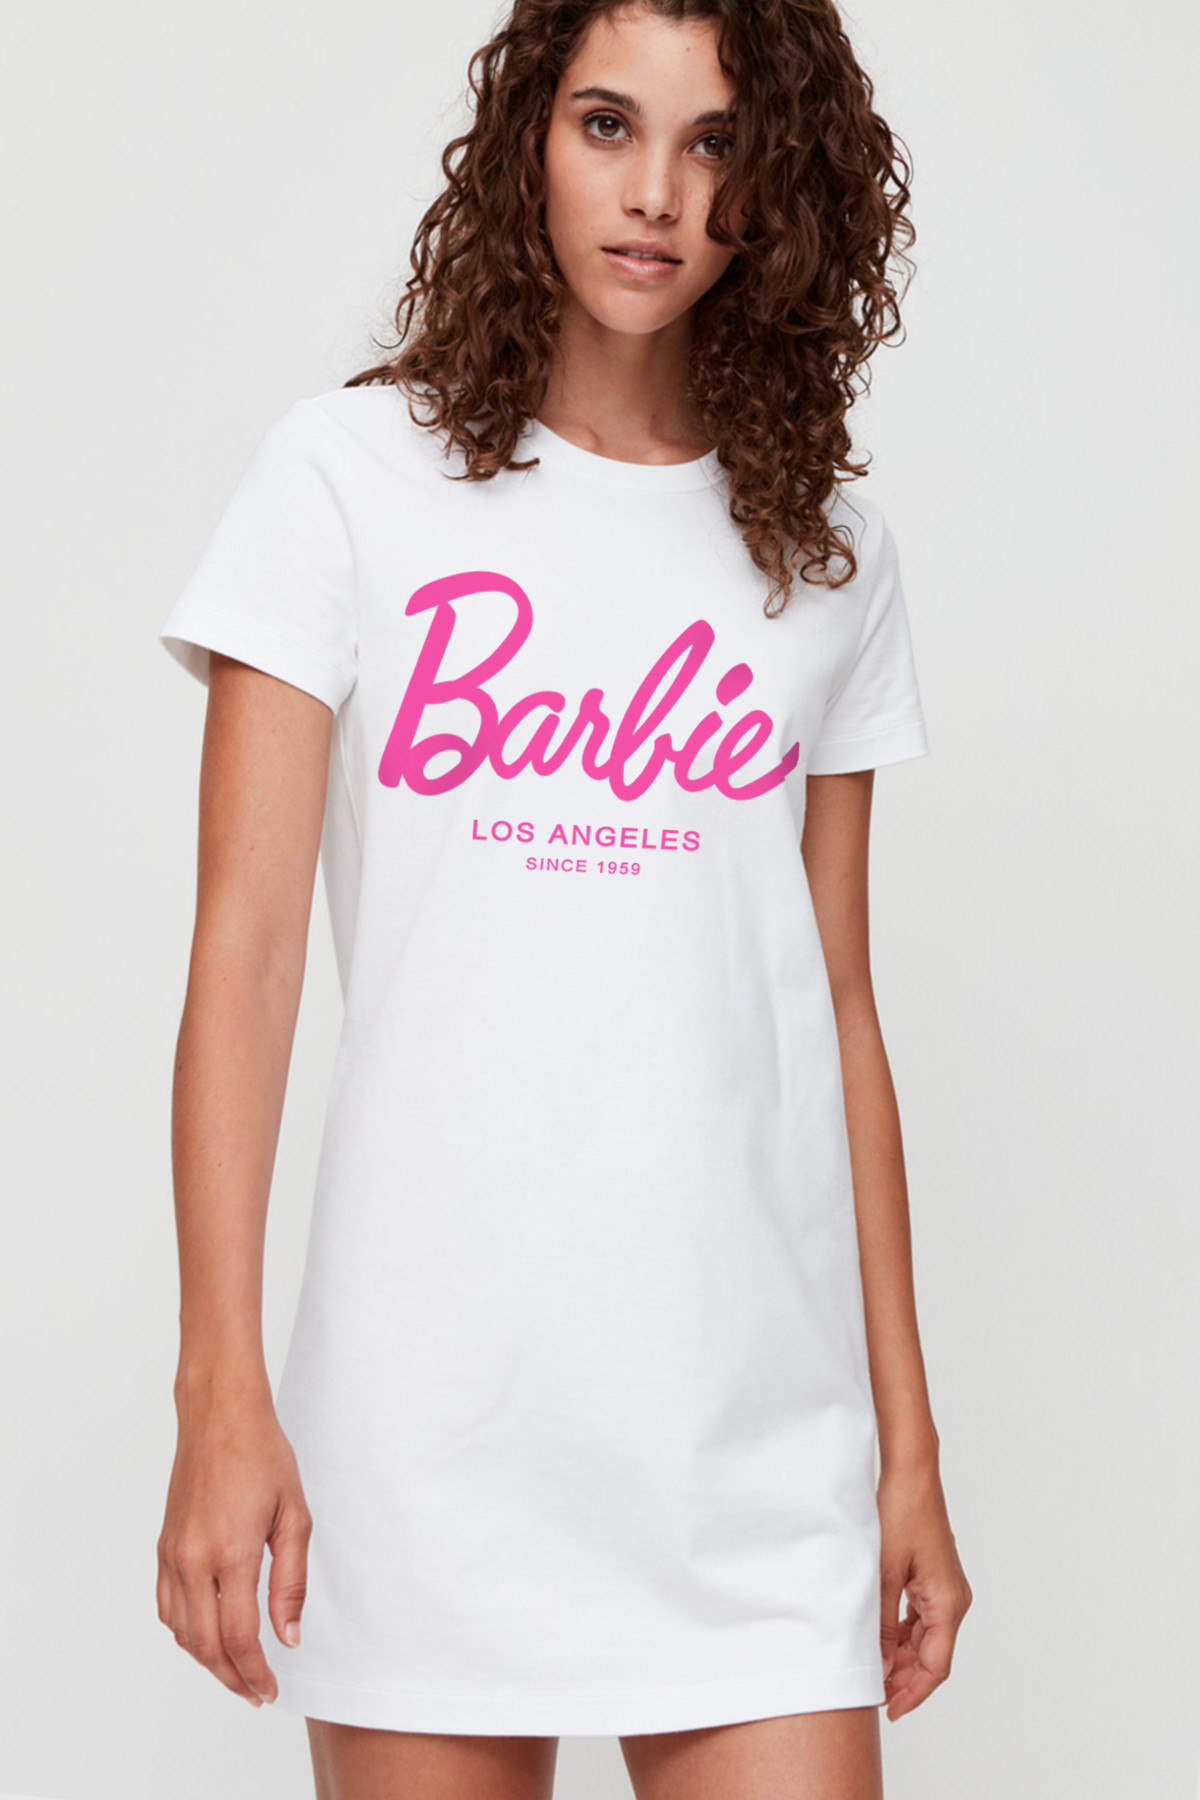 Barbie Beyaz Kısa Kollu Penye Kadın T-shirt Elbise